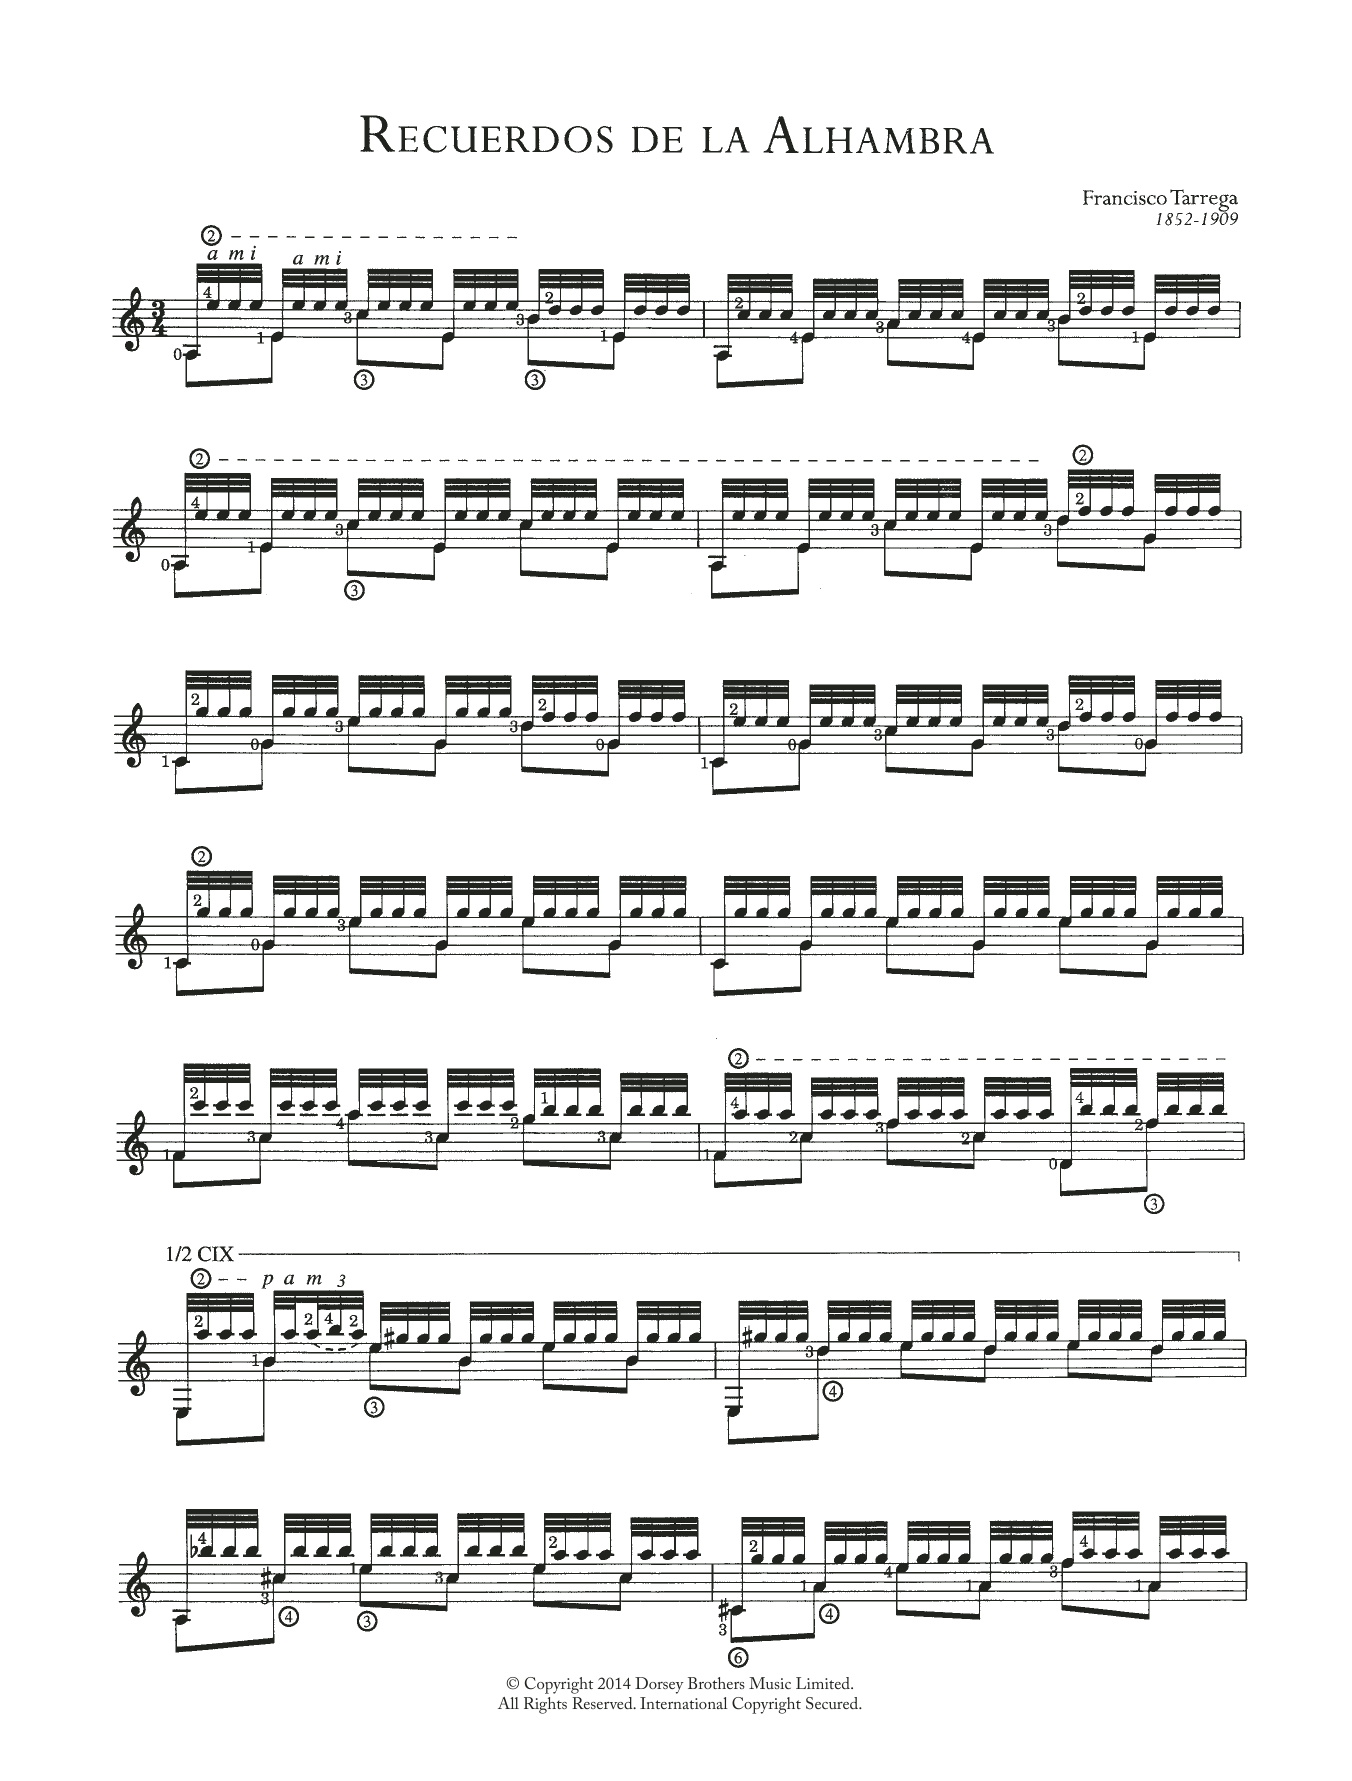 Download Francisco Tárrega Recuerdos de la Alhambra Sheet Music and learn how to play Brass Solo PDF digital score in minutes